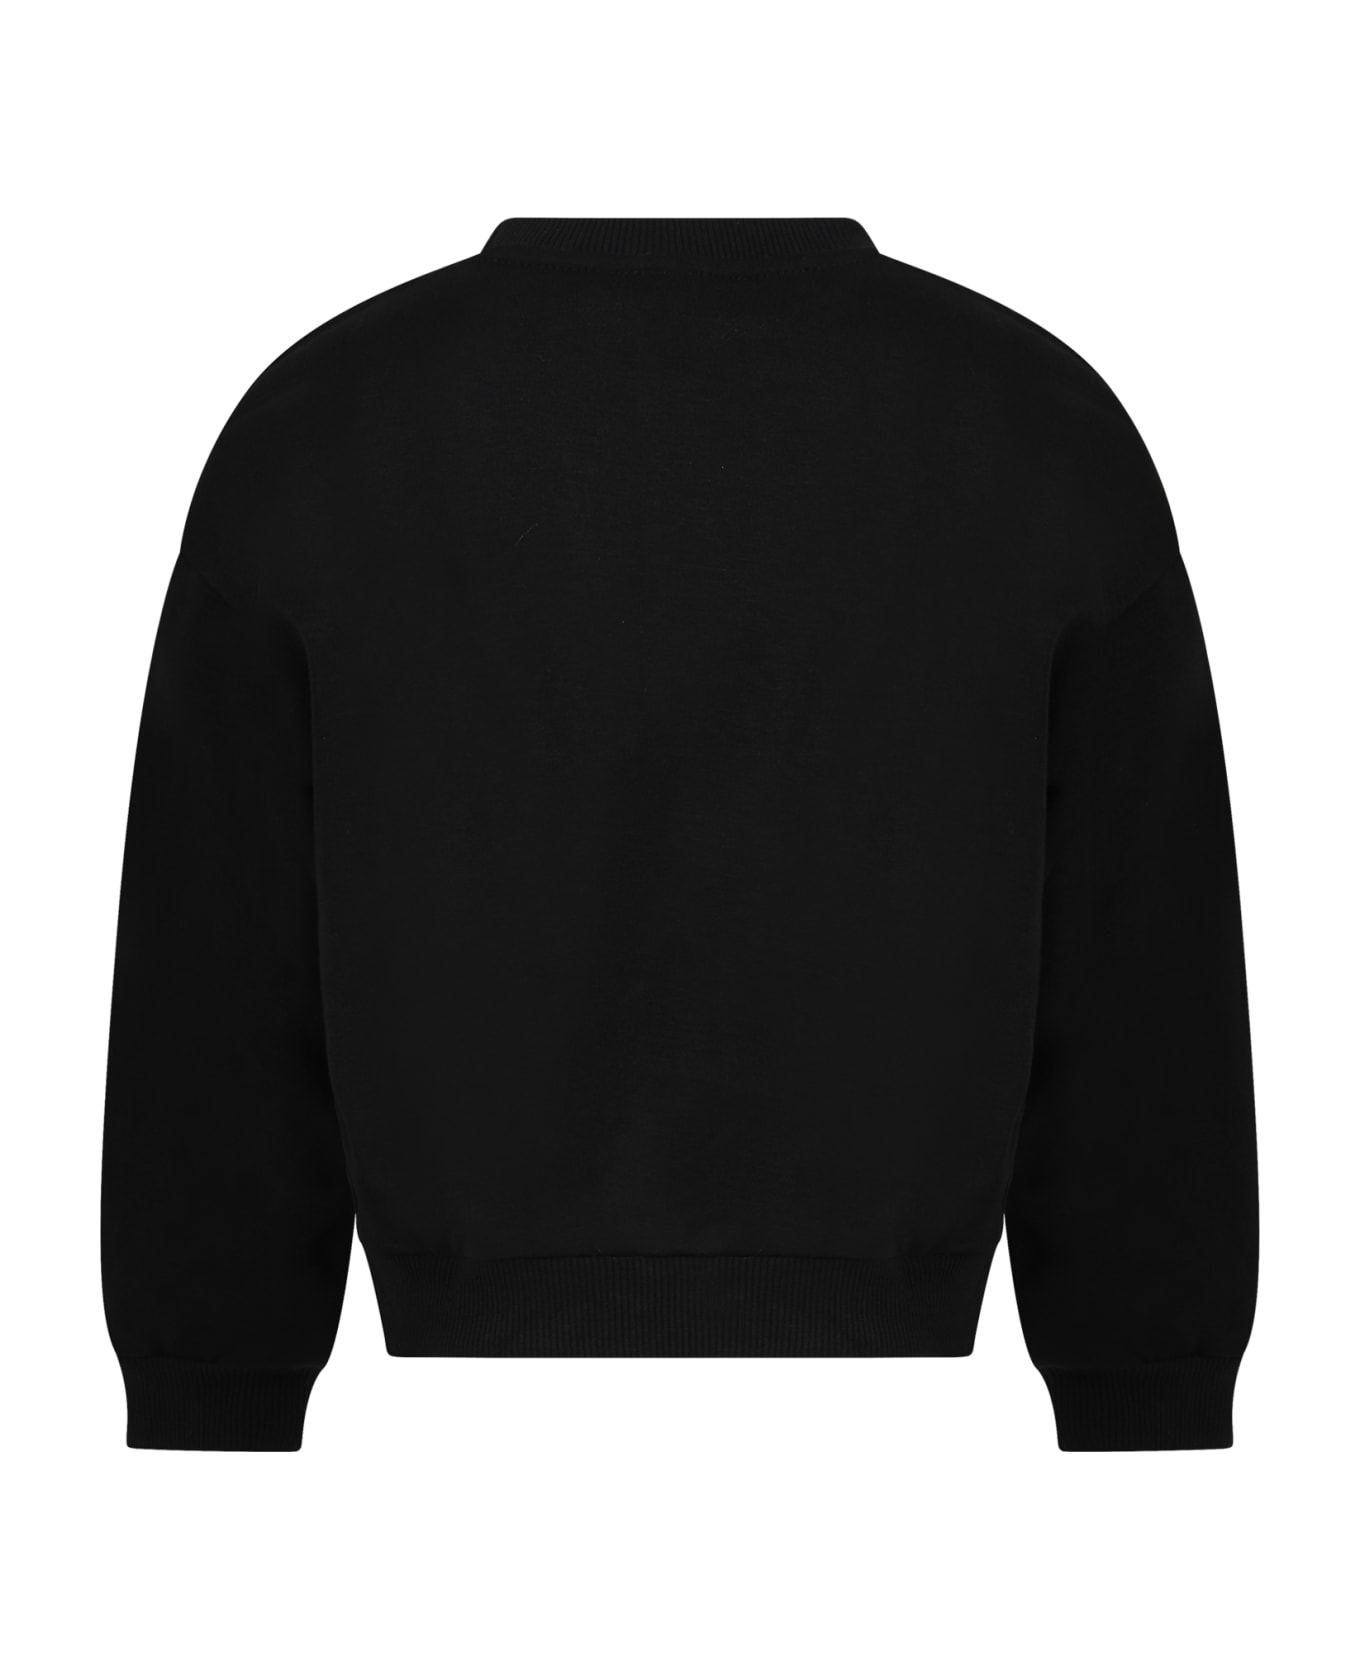 Nike Black Sweatshirt For Boy With Logo - Black